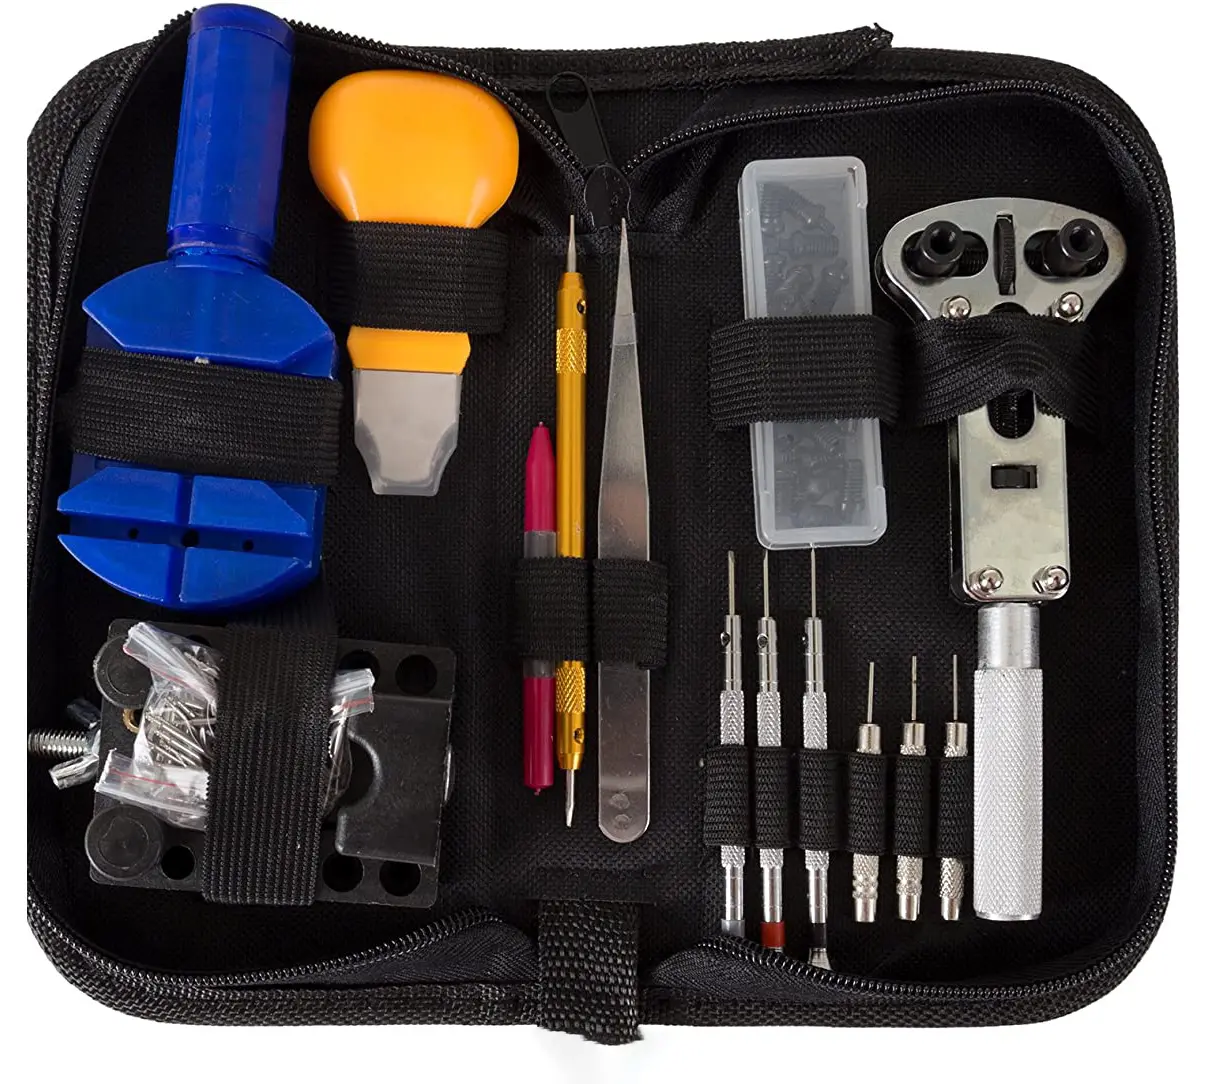 A multi-piece watch tool kit